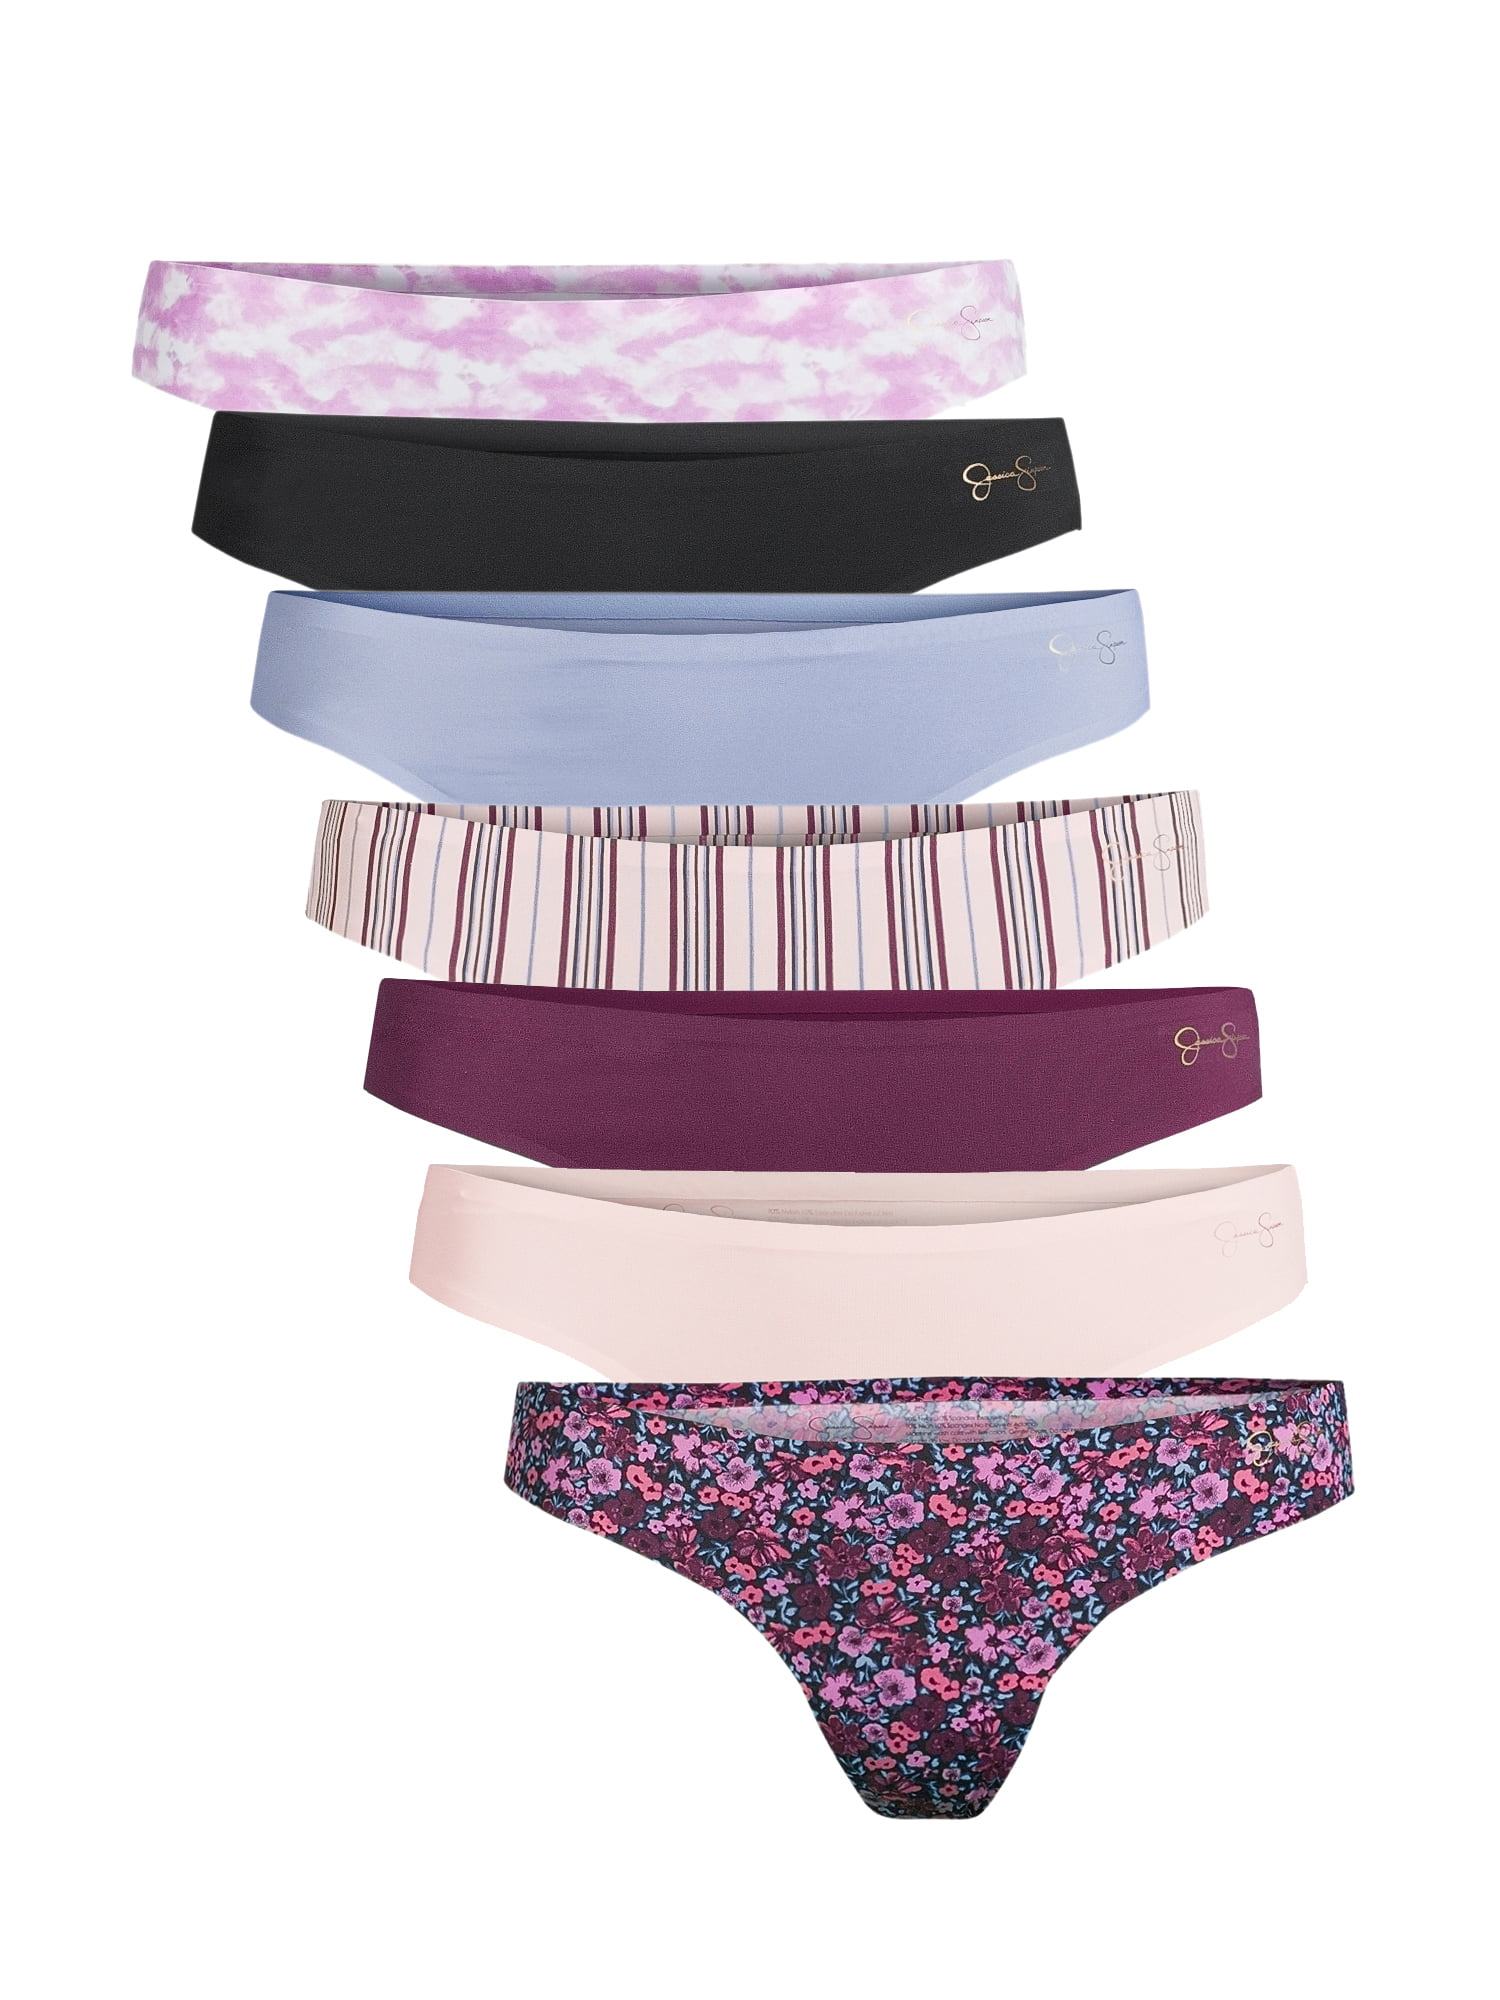 Jessica Simpson Women's Micro Bonded Thong Panties, 5-Pack 